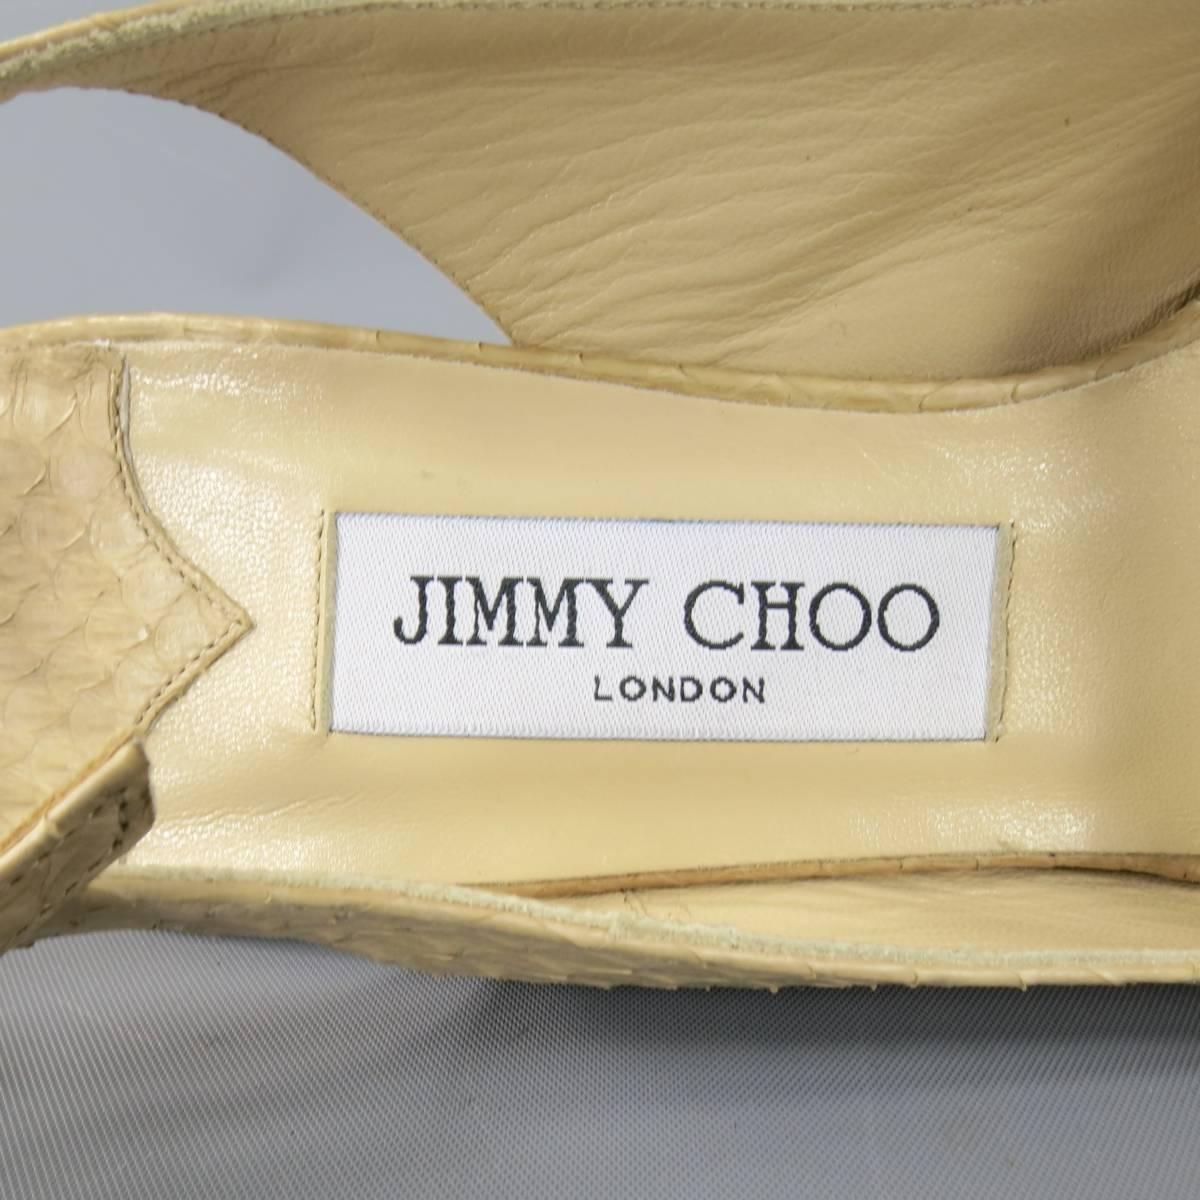 JIMMY CHOO Pumps - Size 9 Beige Python Slingback Peep Toe Platform Heels 1